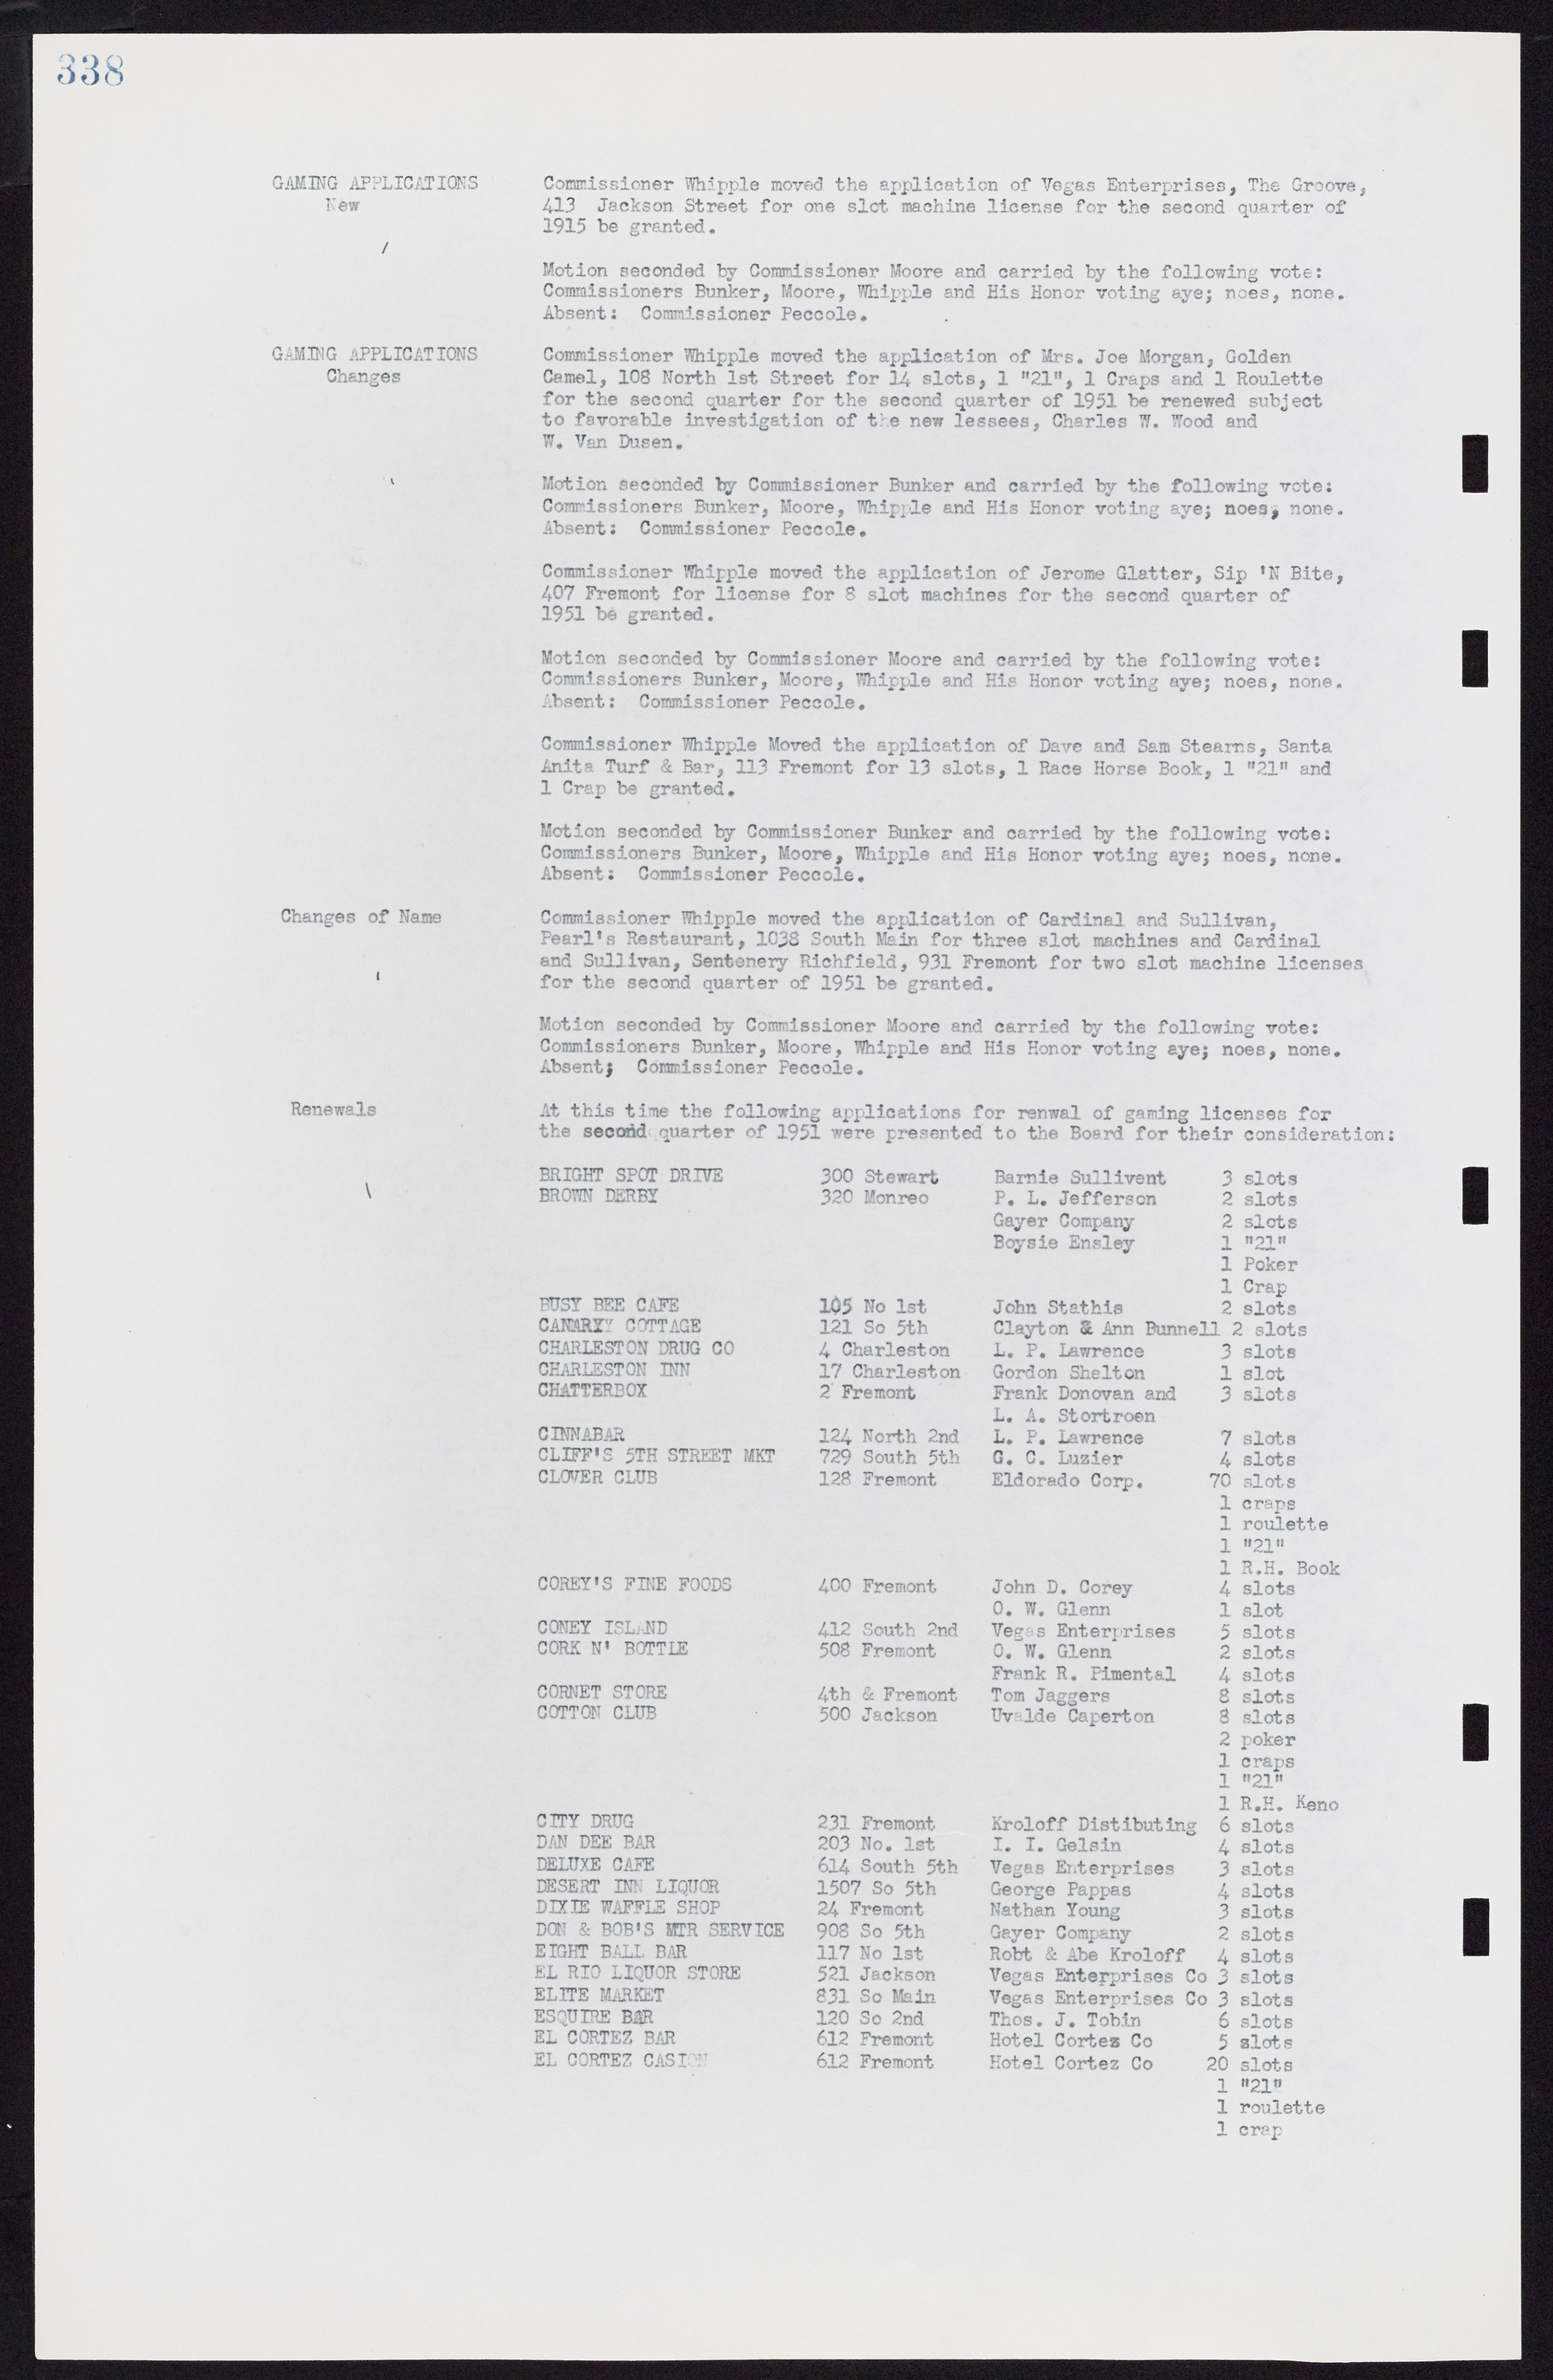 Las Vegas City Commission Minutes, November 7, 1949 to May 21, 1952, lvc000007-350